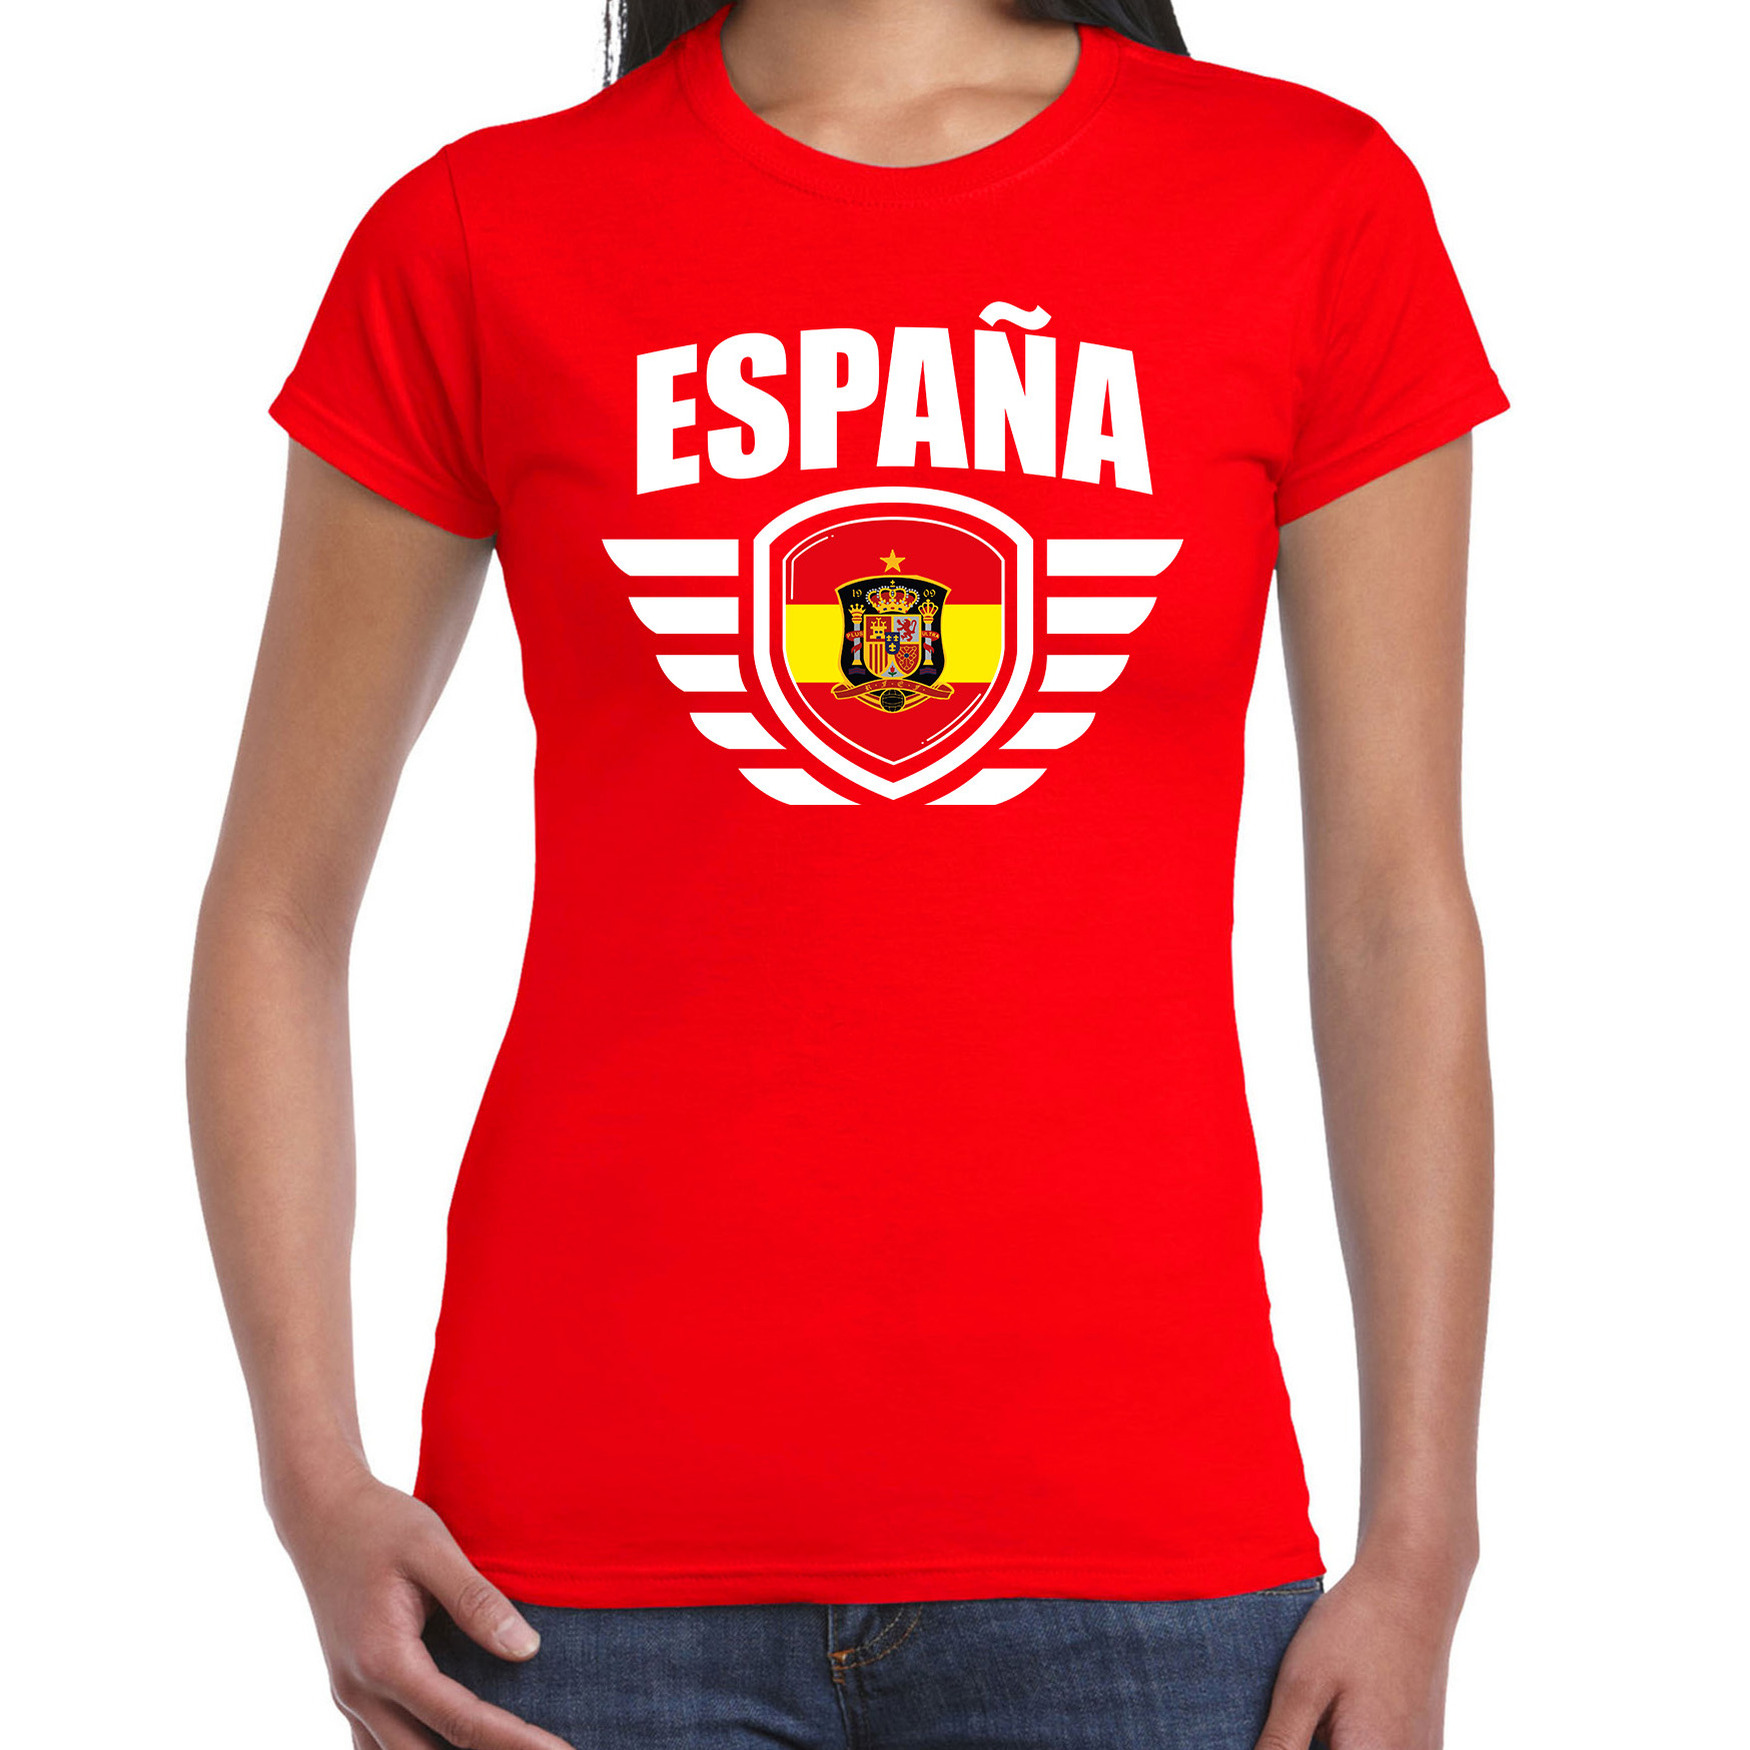 Espana landen-voetbal t-shirt rood dames EK-WK voetbal